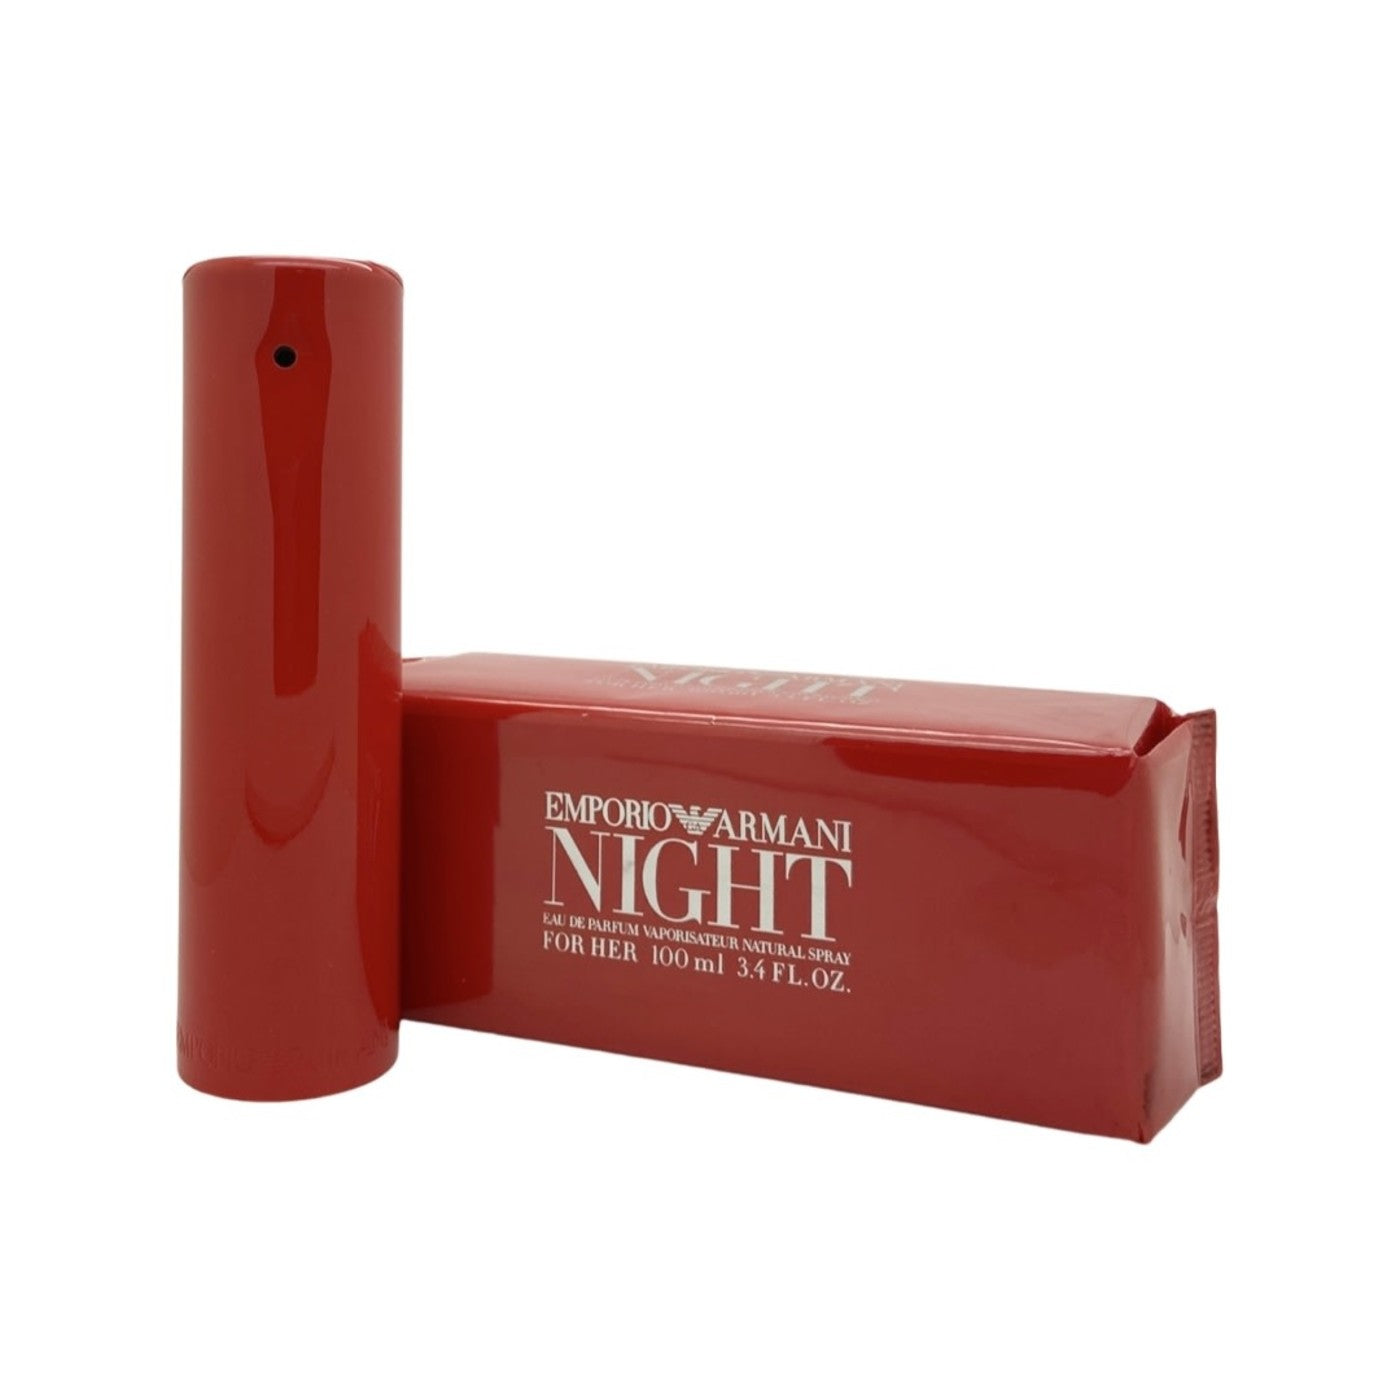 Giorgio Armani Emporio Night 100 ml Eau De Perfume Spray for Women